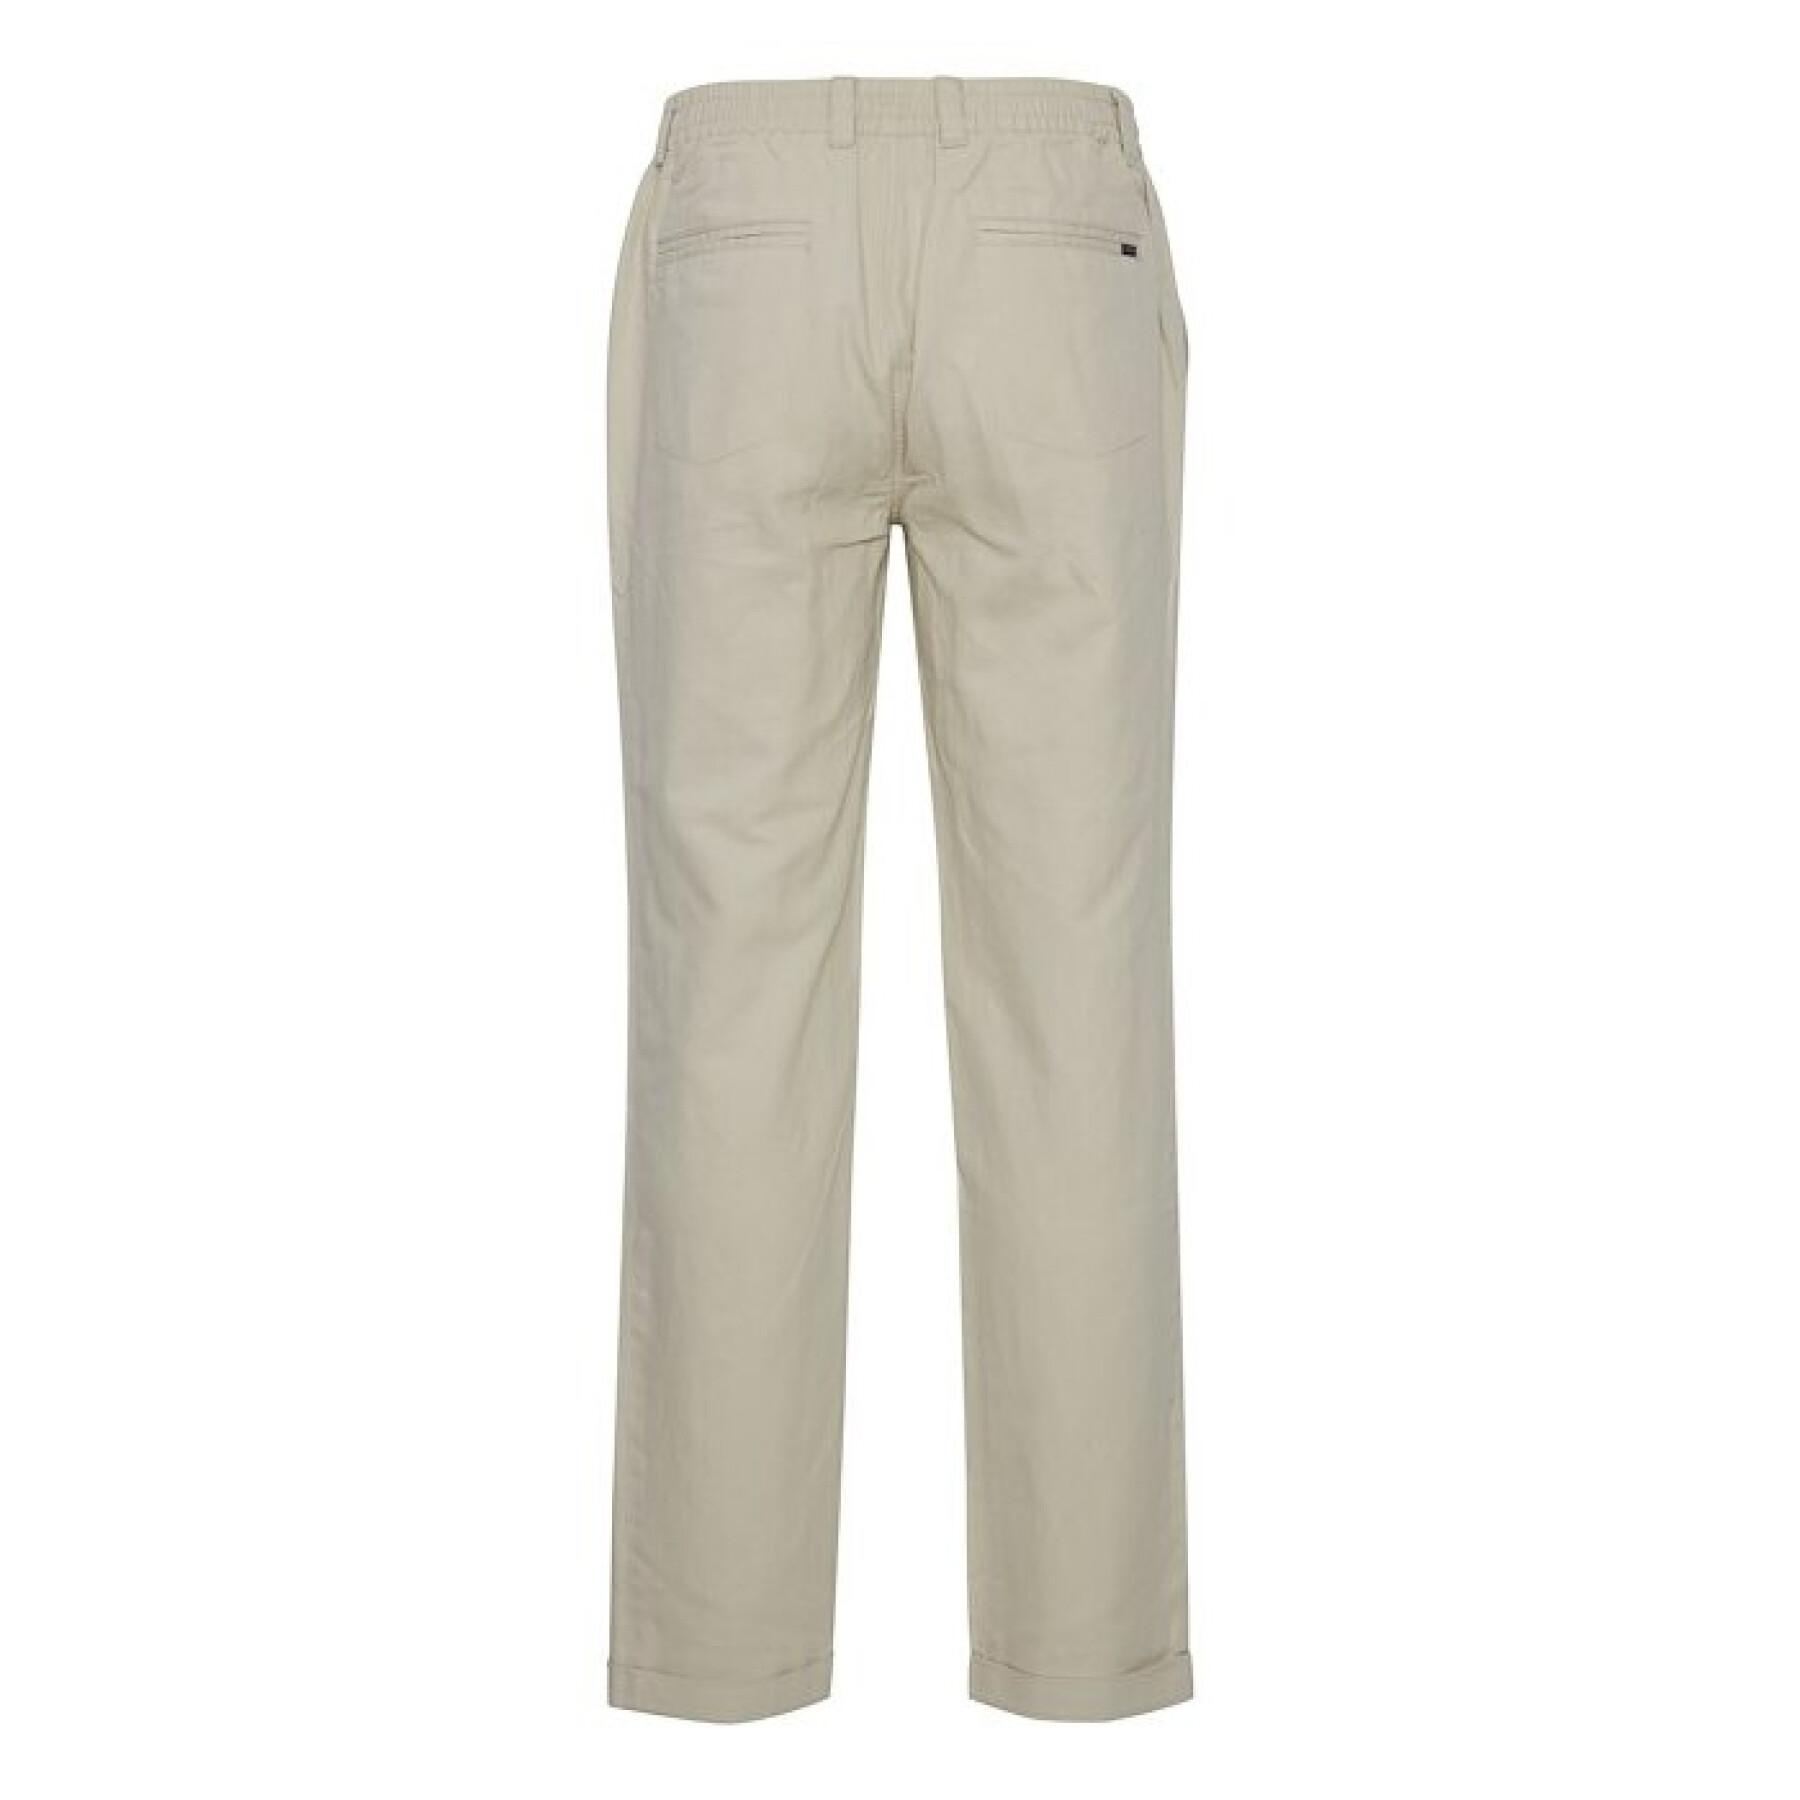 Mixed linen pants Casual Friday Pandrup